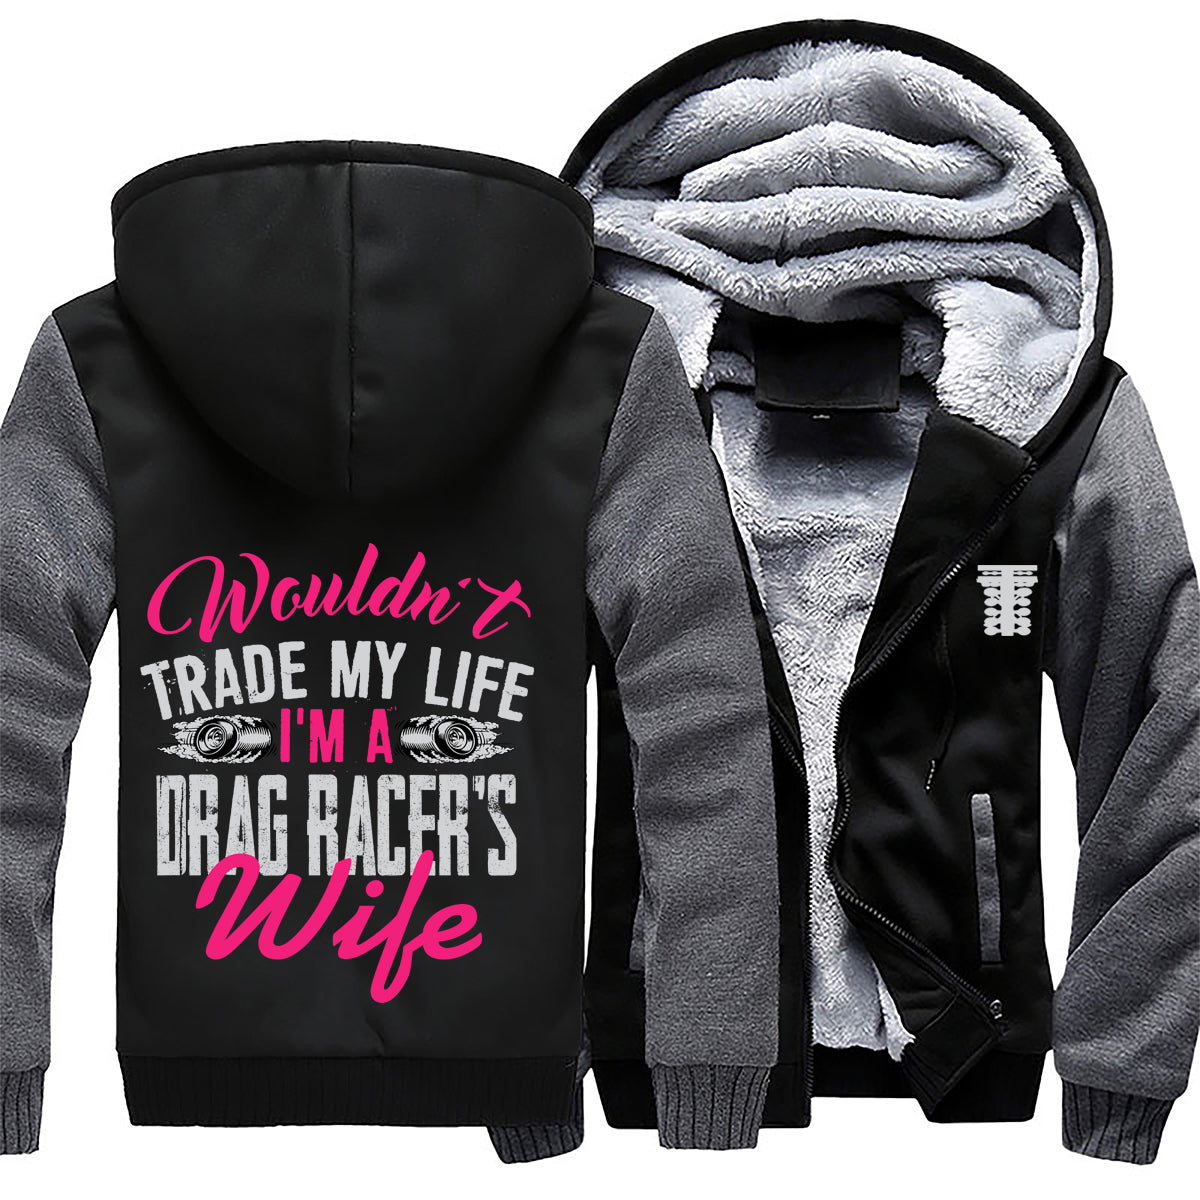 I'm A Drag Racer's Wife Jacket 